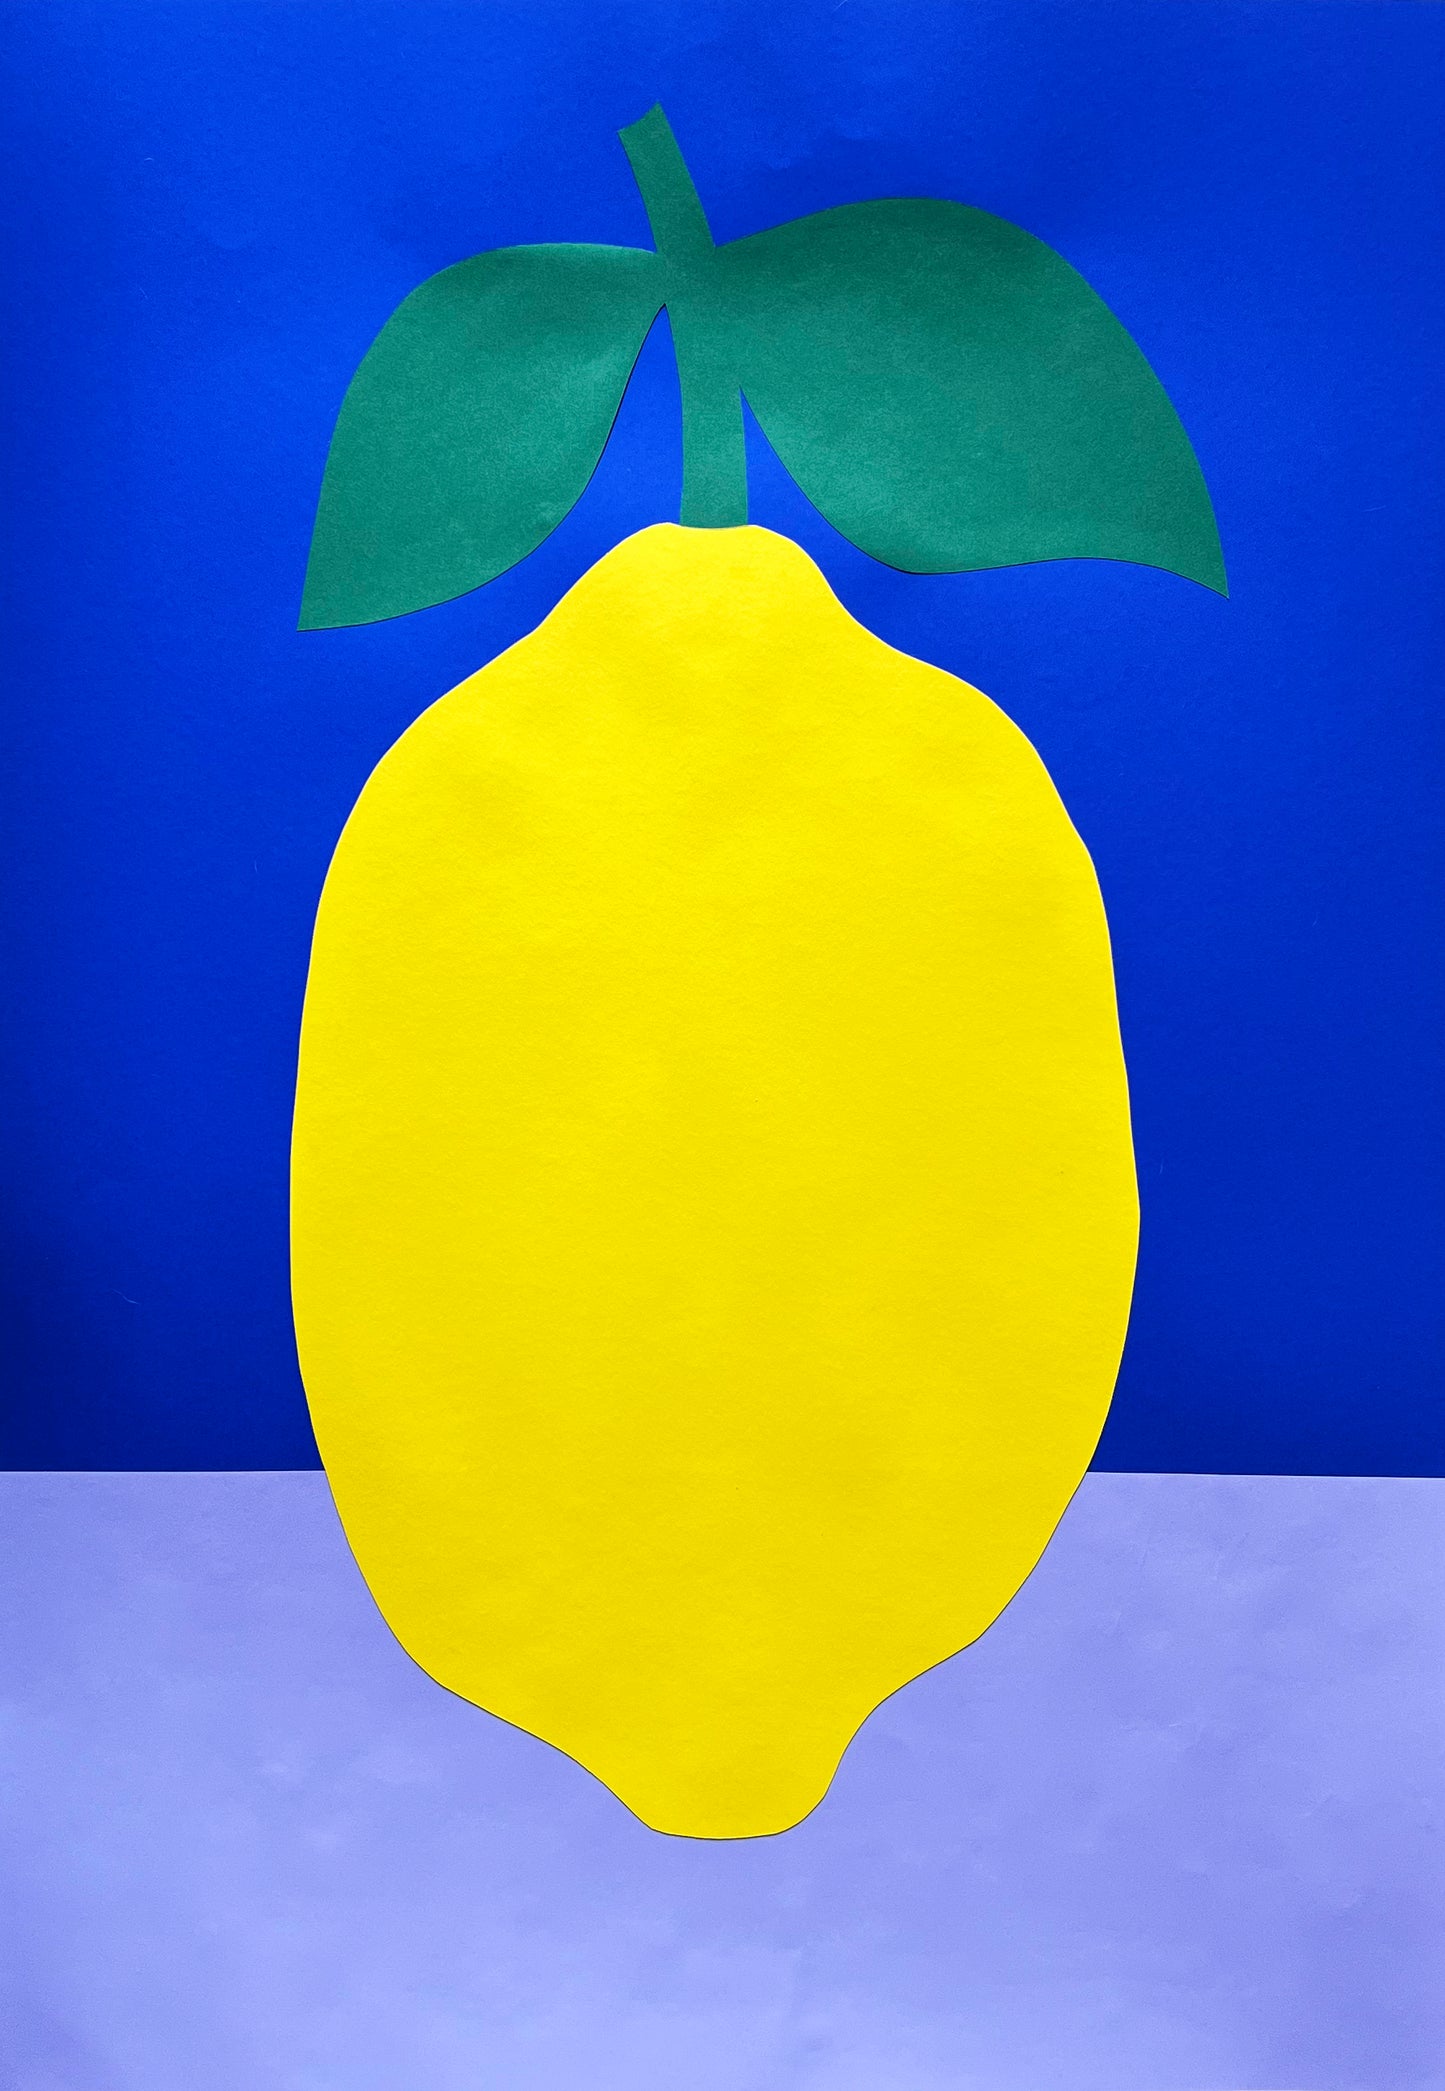 Big Lemon With Two Leaves